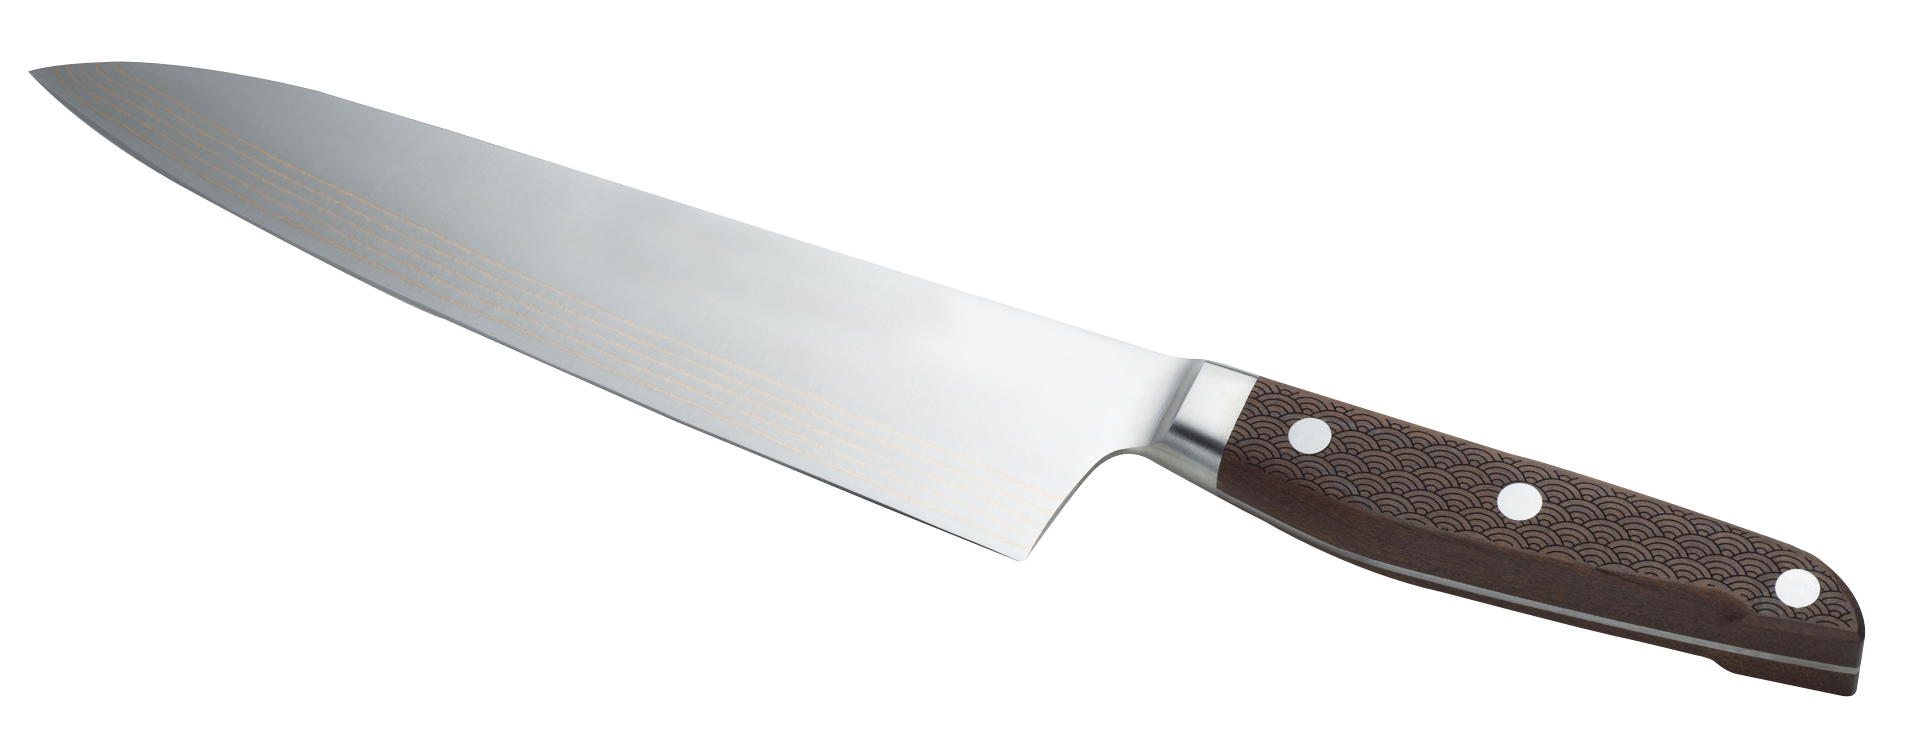 Knife PNG-PlusPNG.com-1500